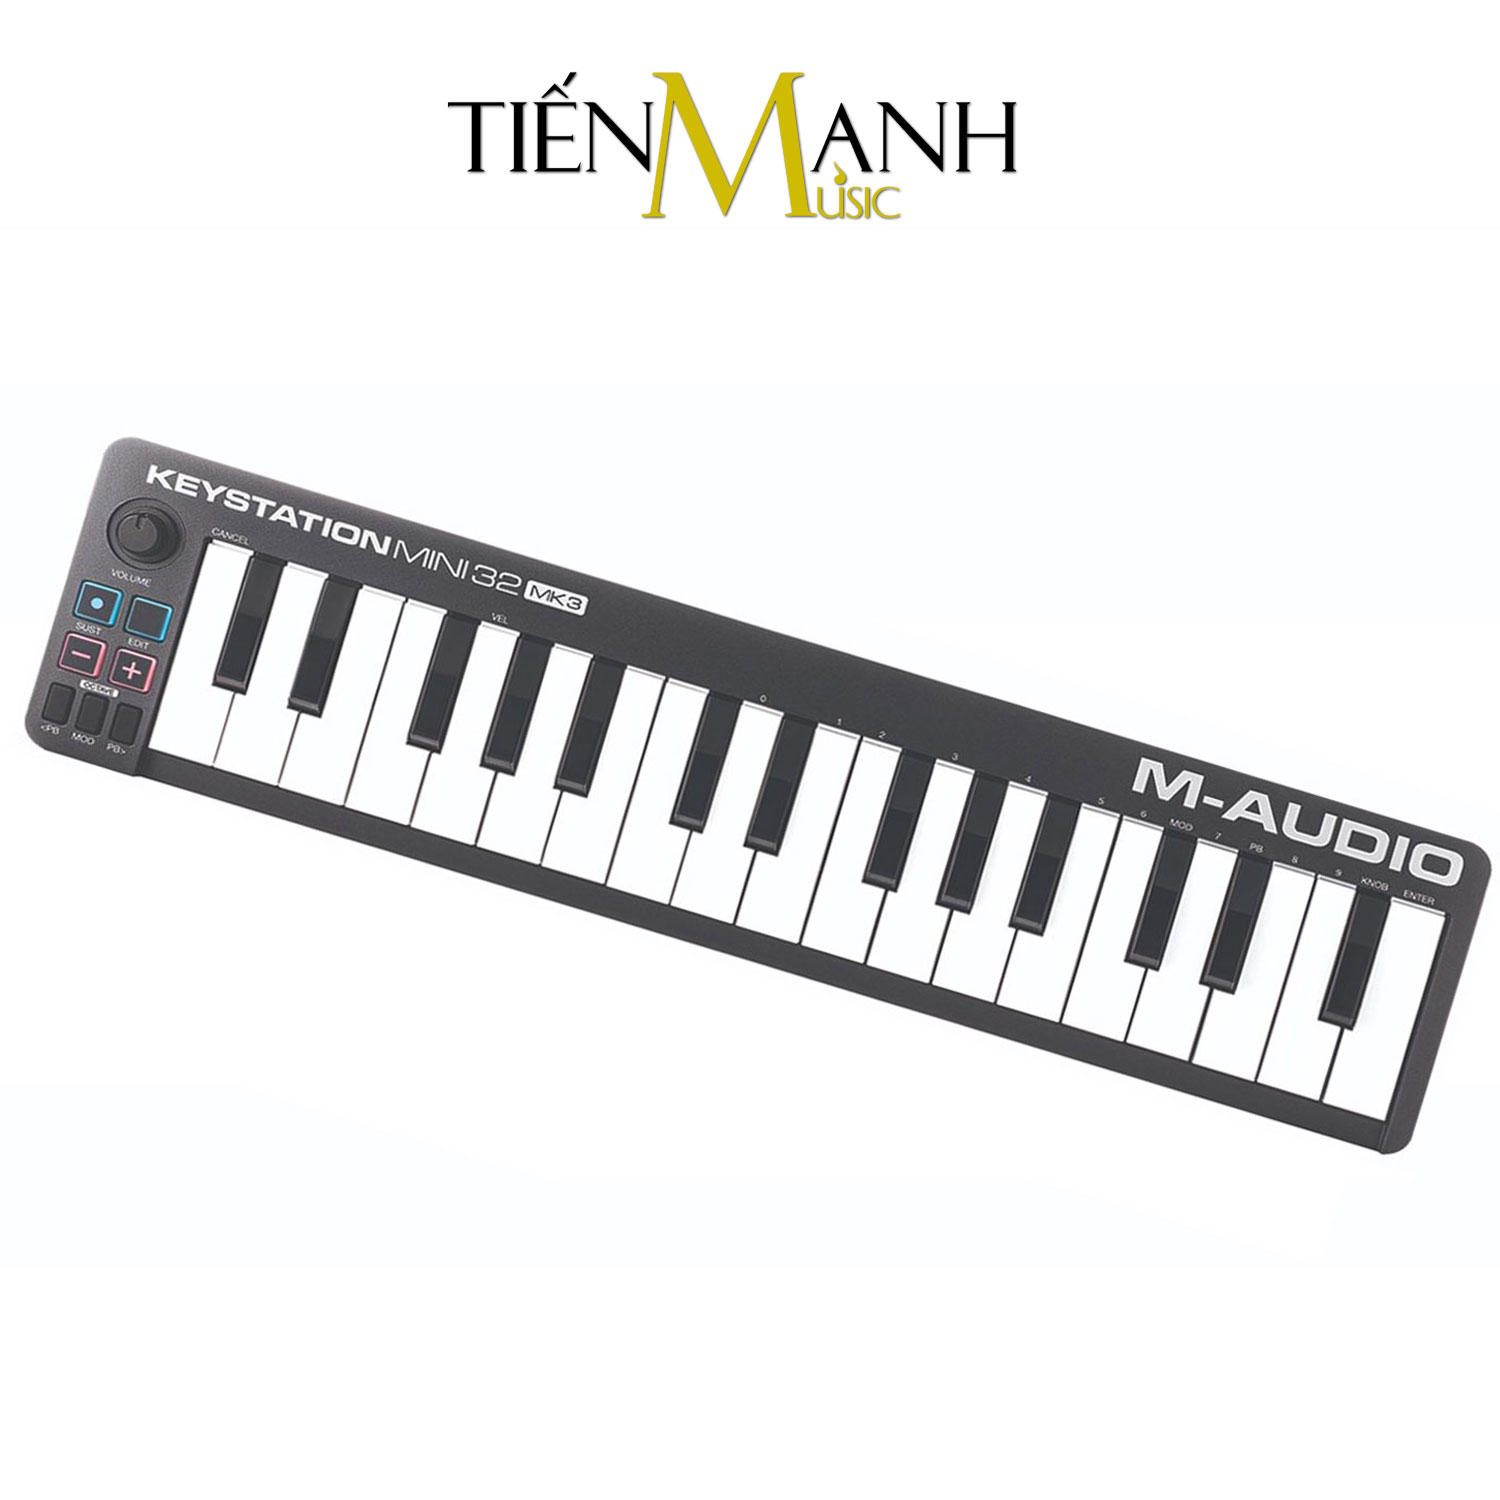 Mat-M-Audio Keystation Mini 32 Keys MIDI Controller .jpg